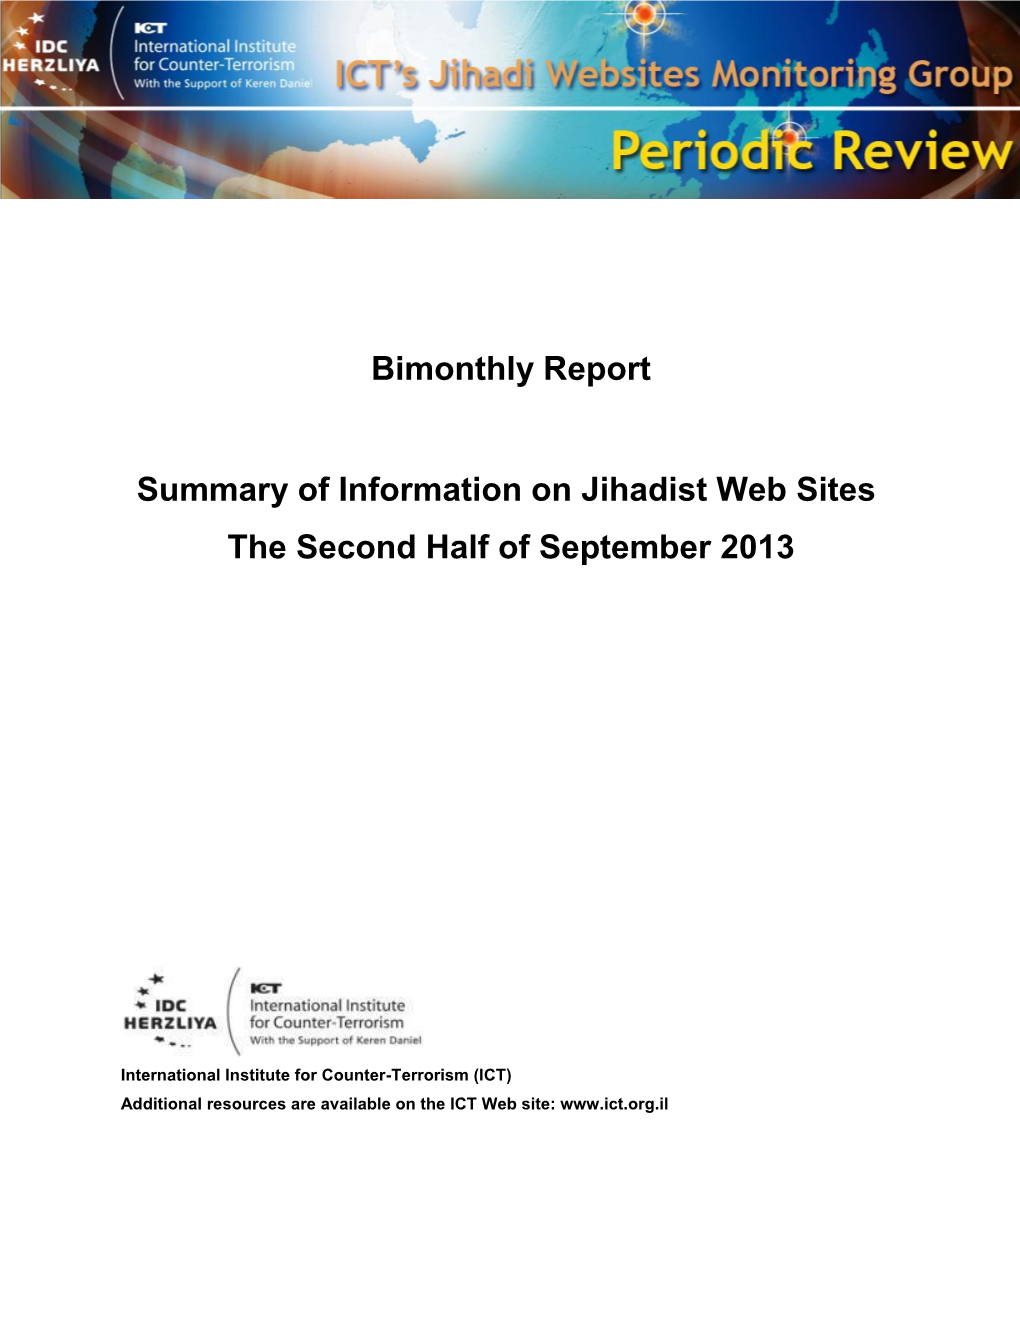 Bimonthly Report Summary of Information on Jihadist Web Sites